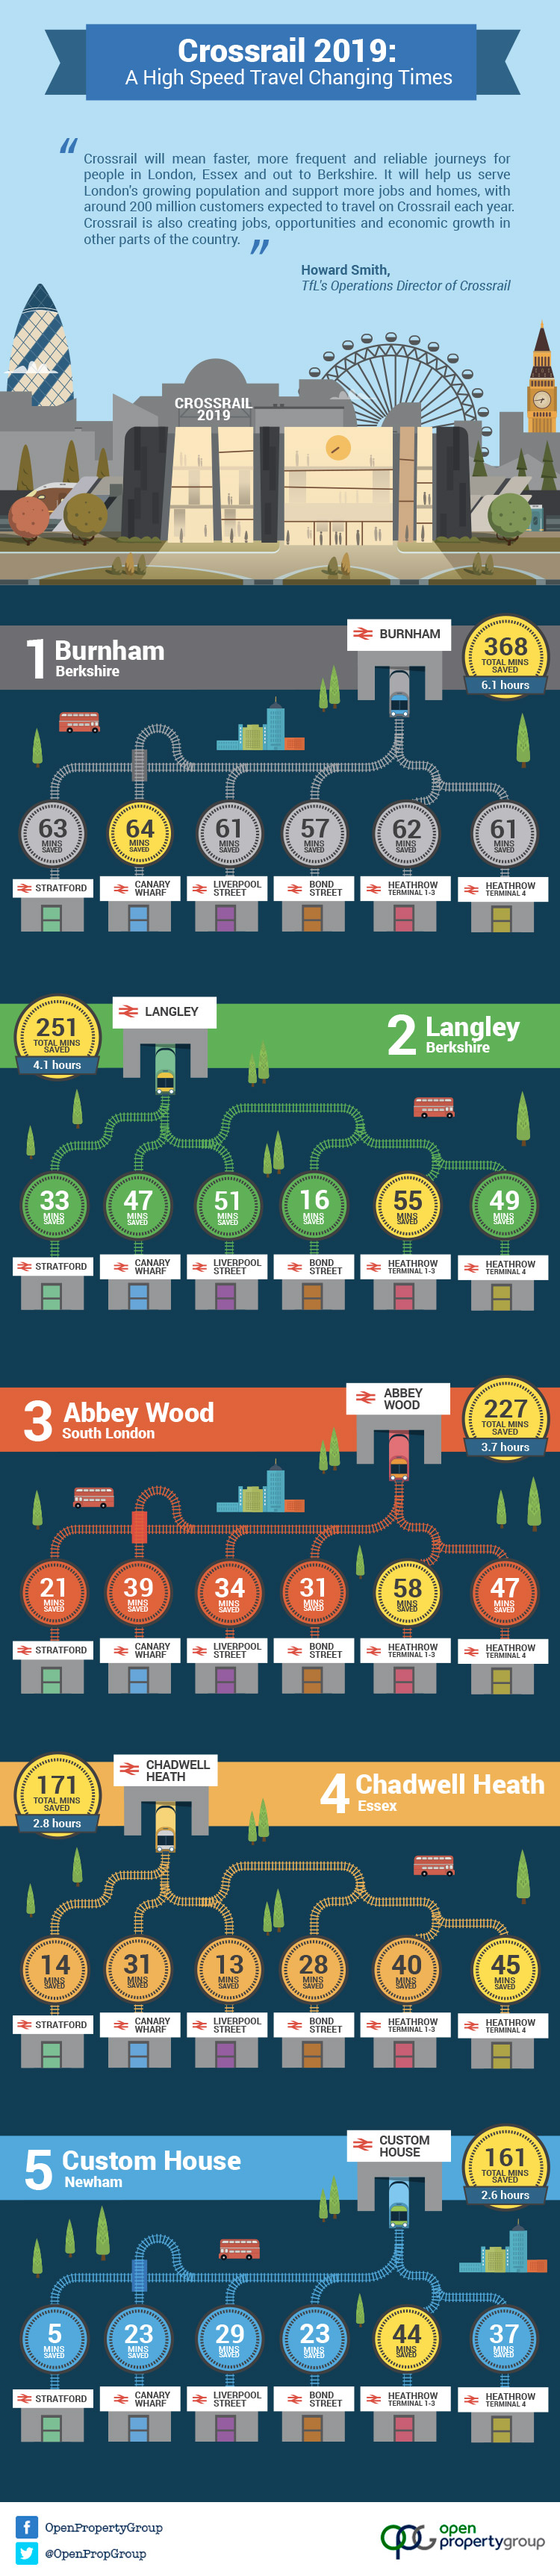 Crossrail_Infographic